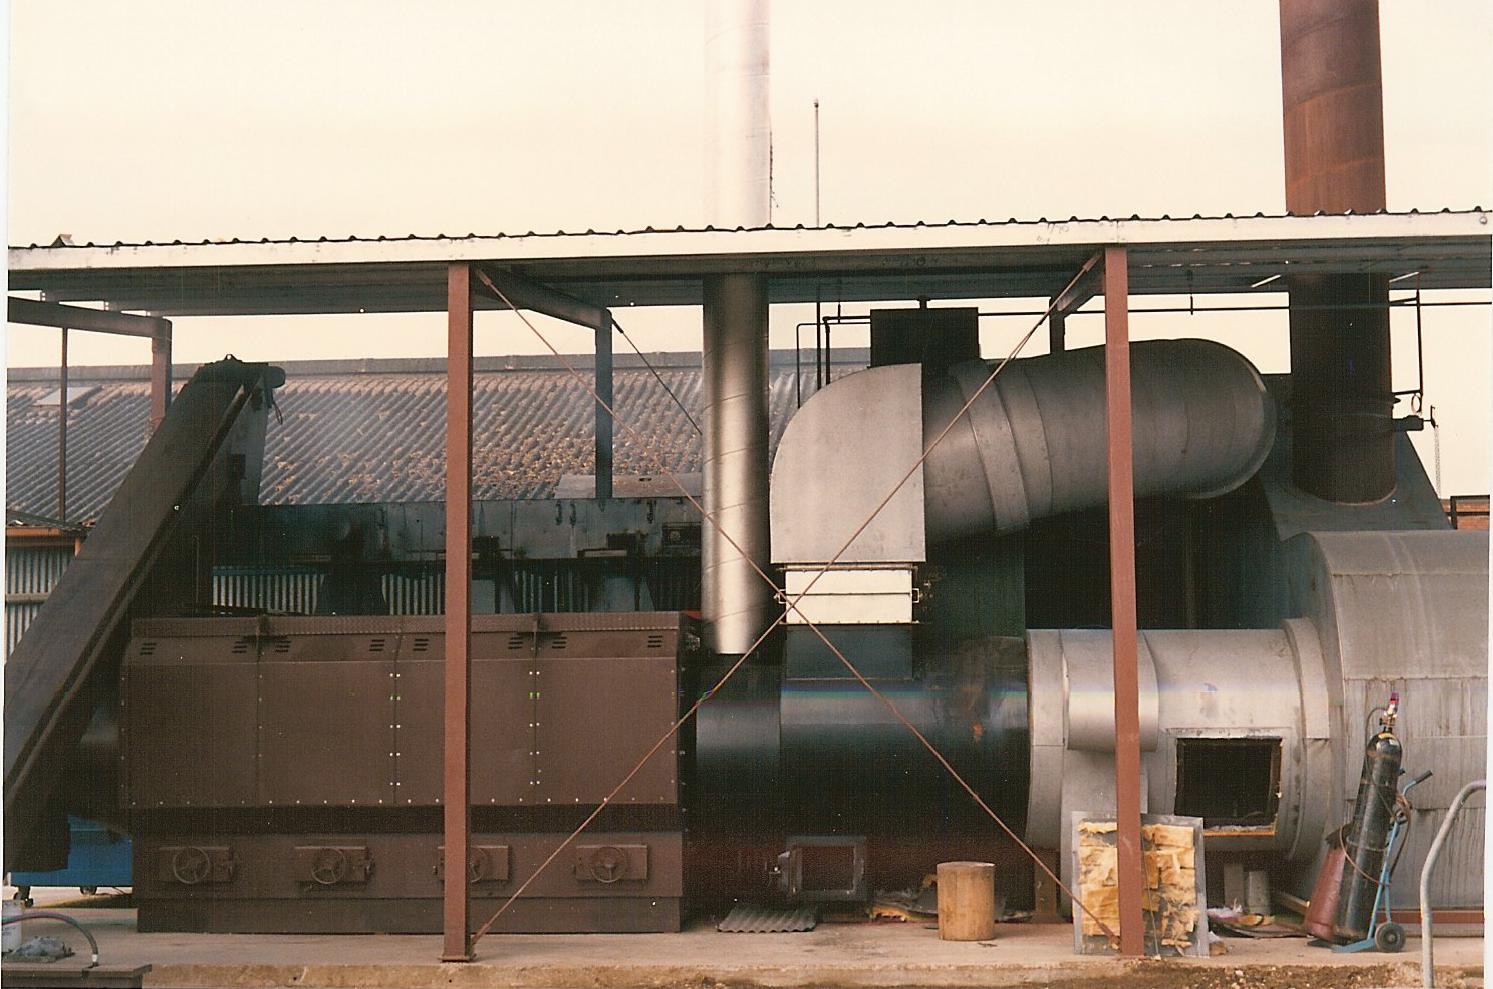 Waterwide Solid Fuel Burner at Austral Ply in Brisbane Australia